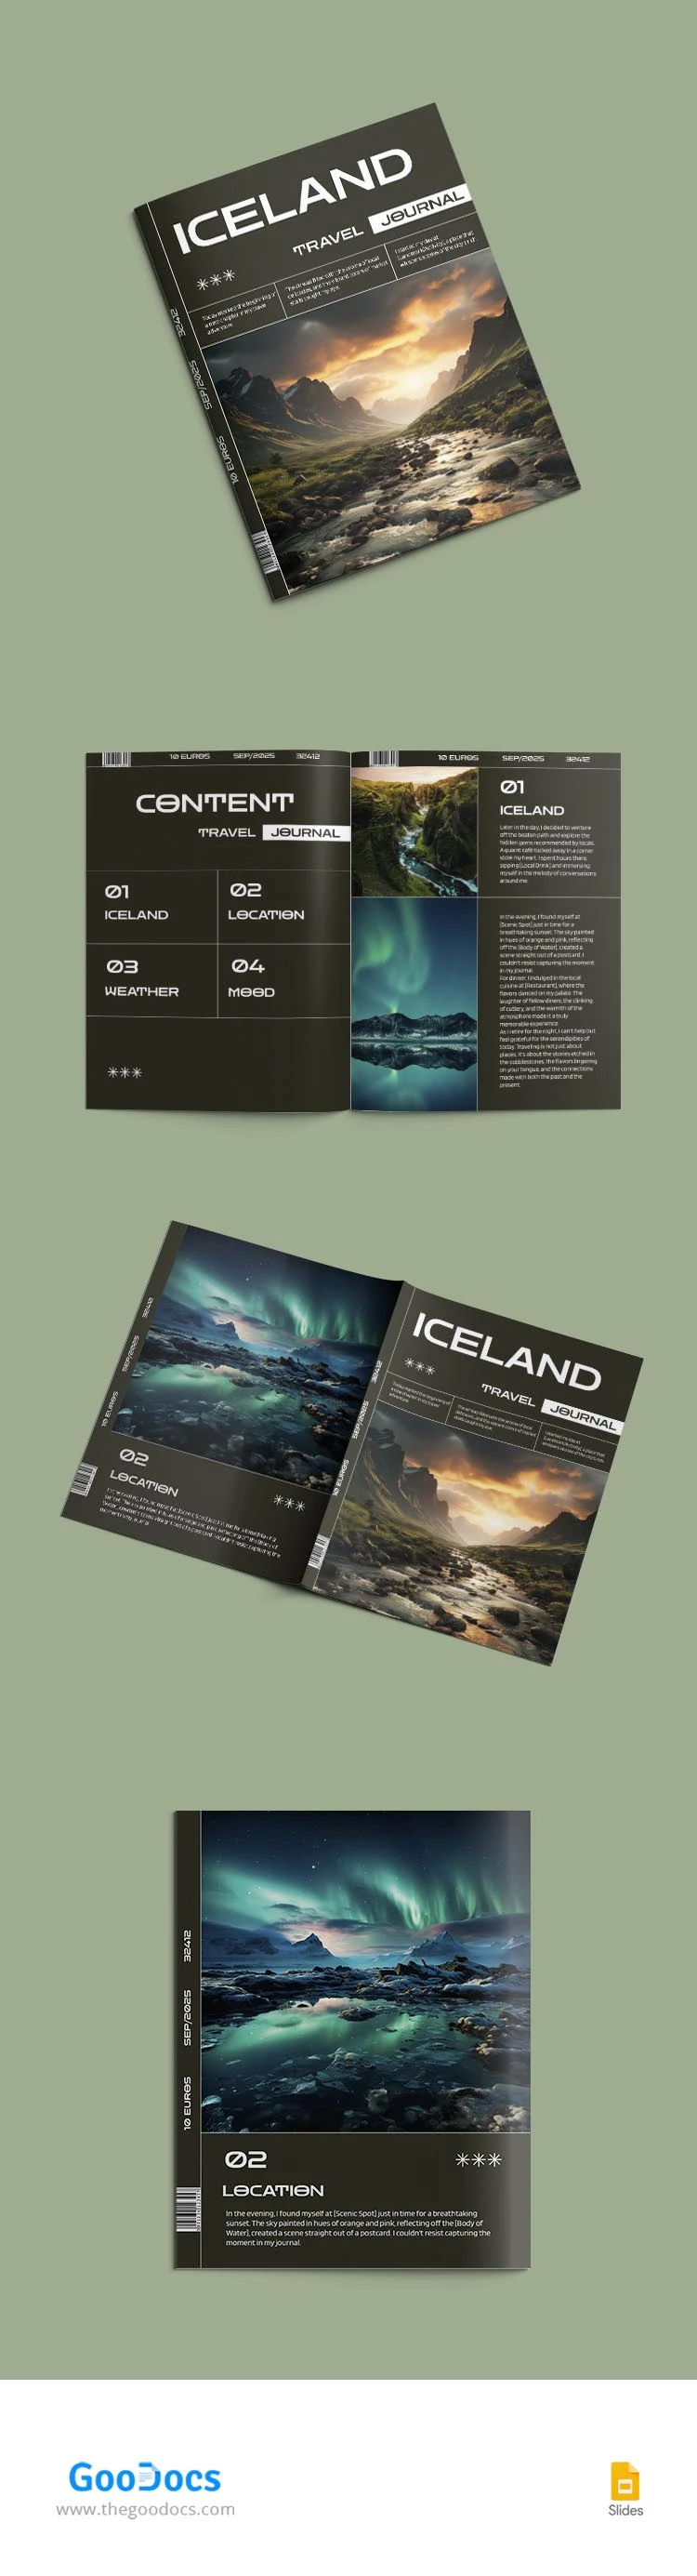 Iceland Journal - free Google Docs Template - 10067513